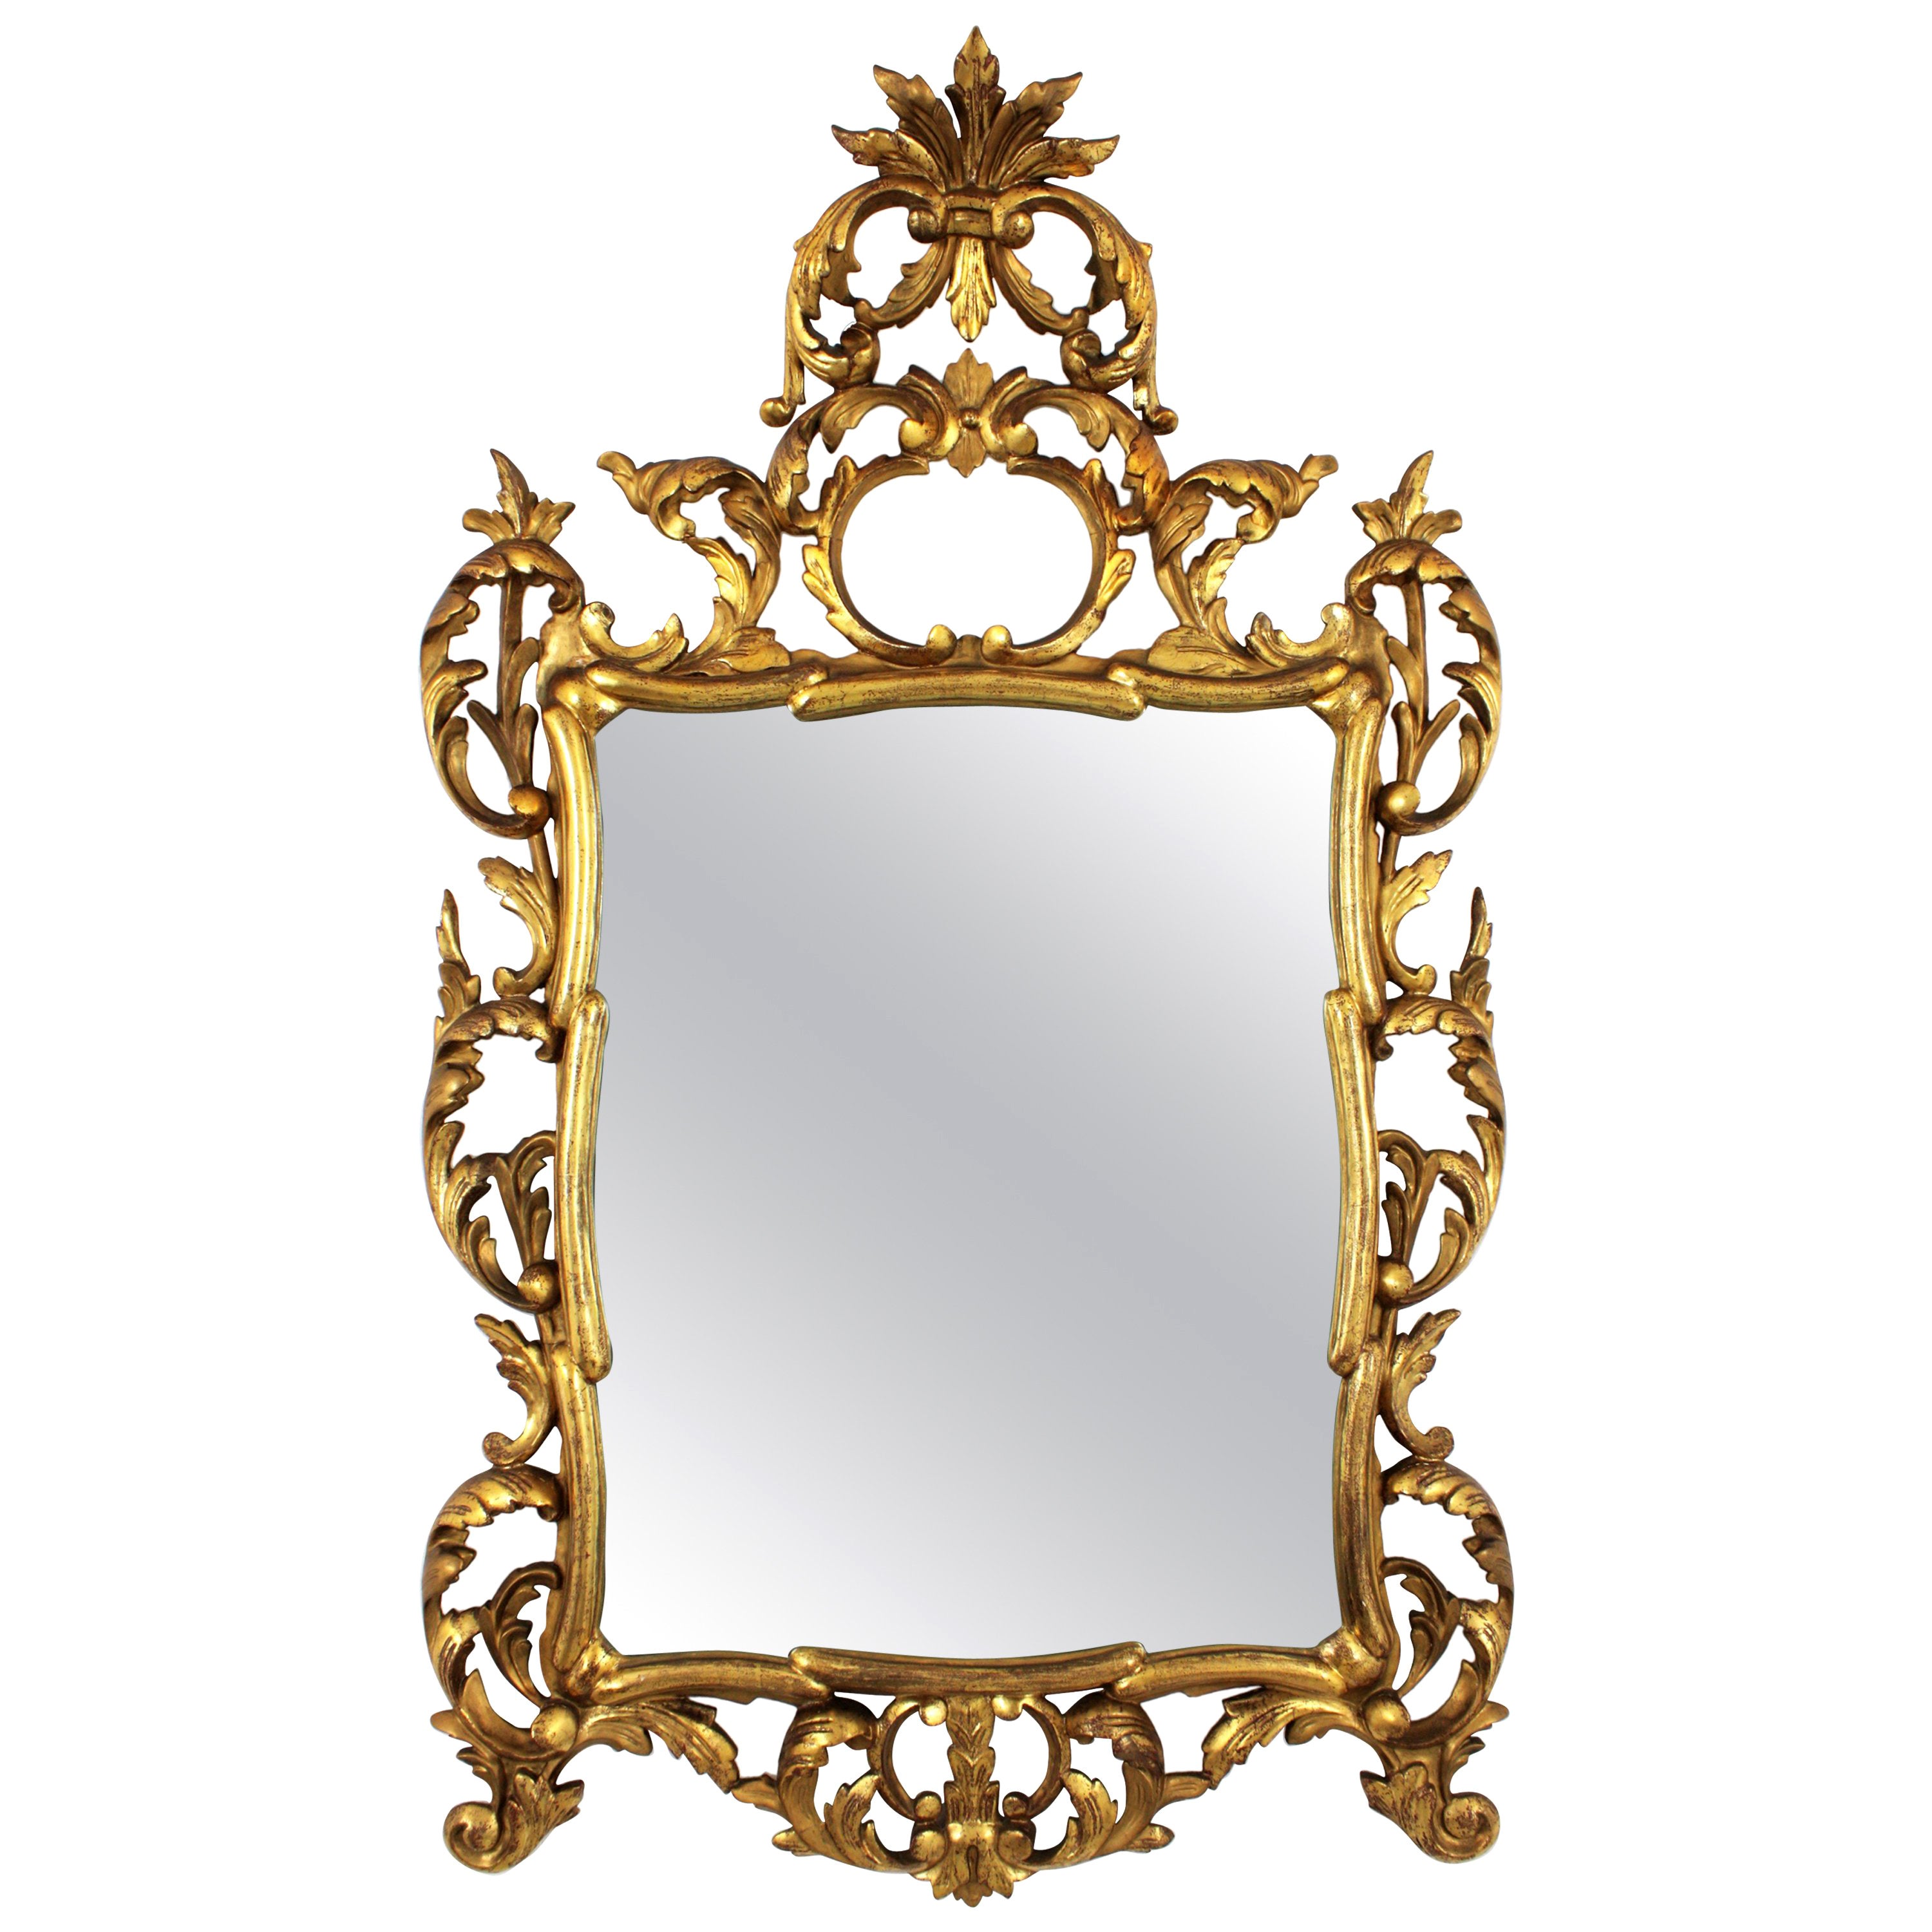 Spanischer Rokoko-Giltwood-Spiegel mit Wappen